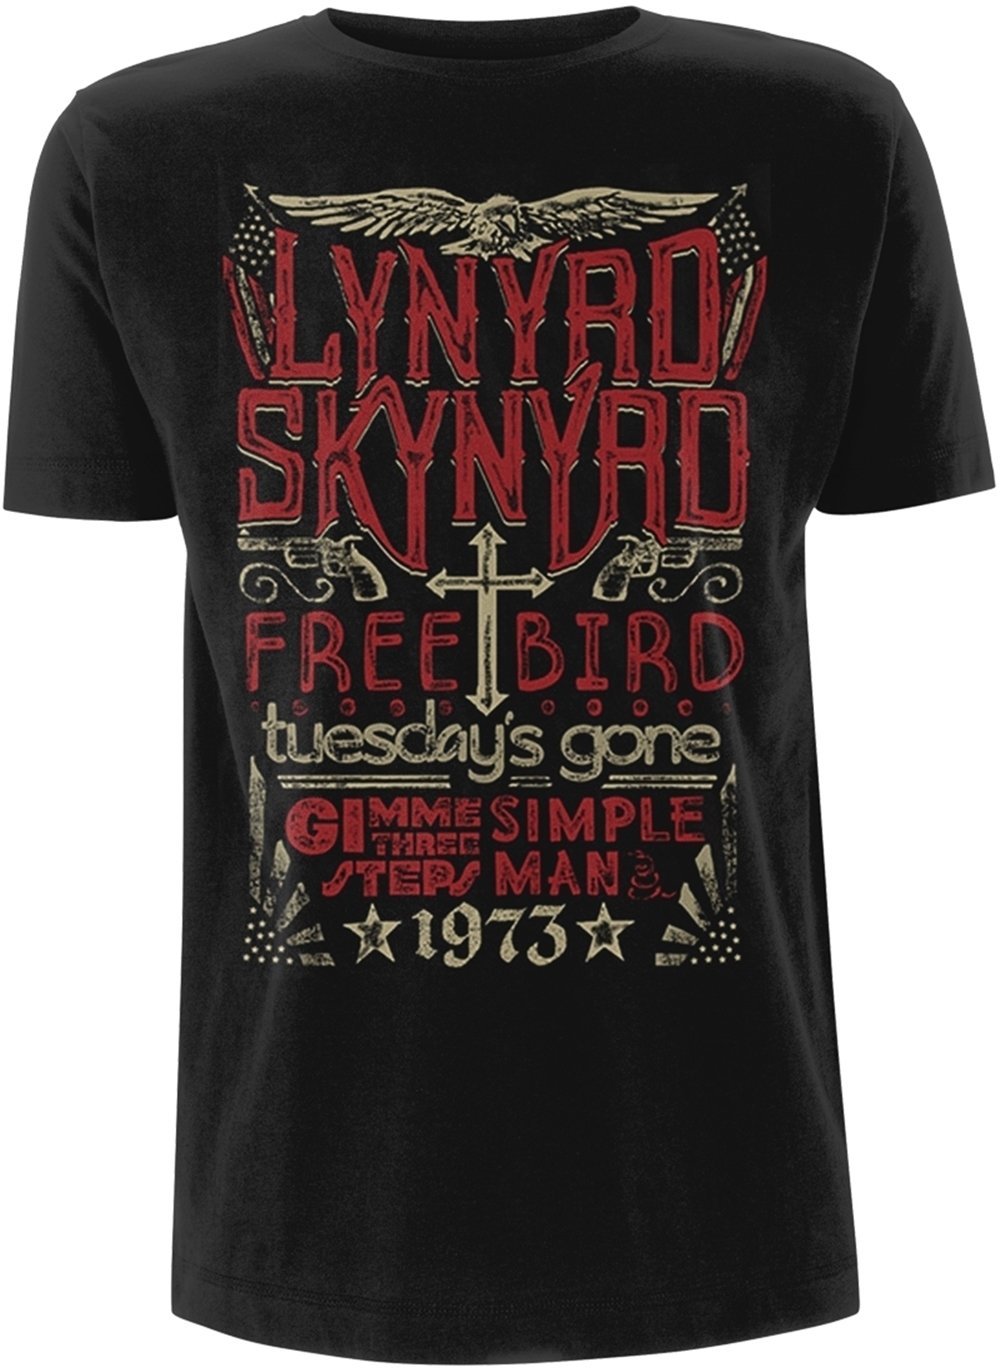 T-Shirt Lynyrd Skynyrd T-Shirt Freebird 1973 Hits Black S